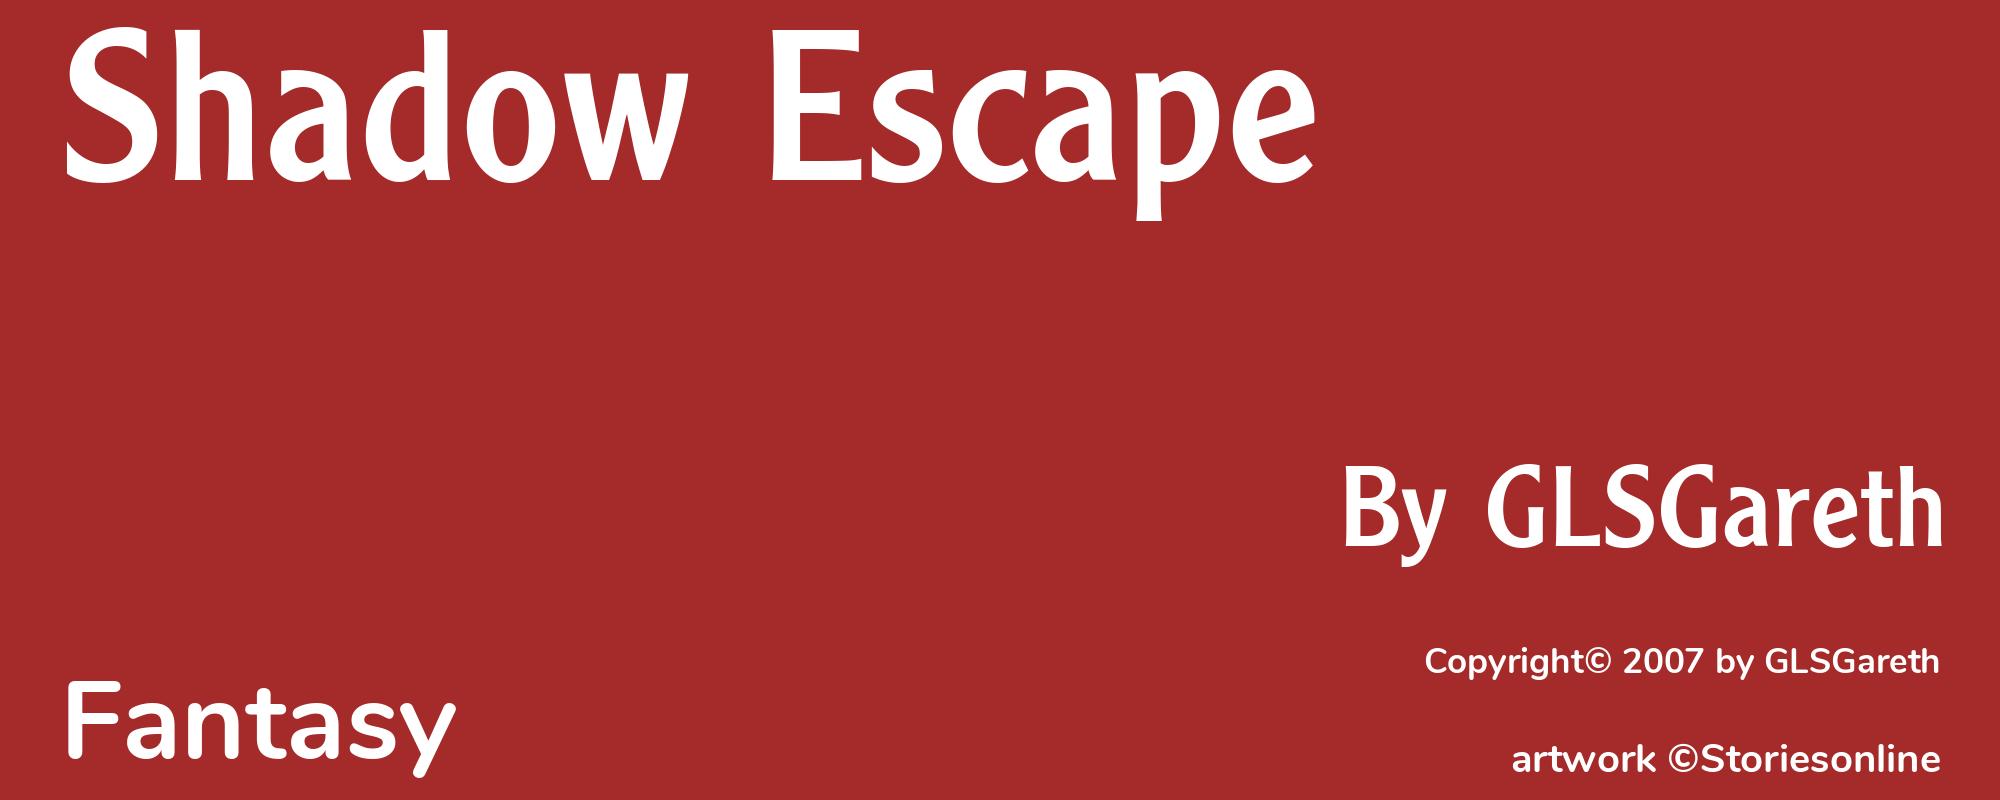 Shadow Escape - Cover